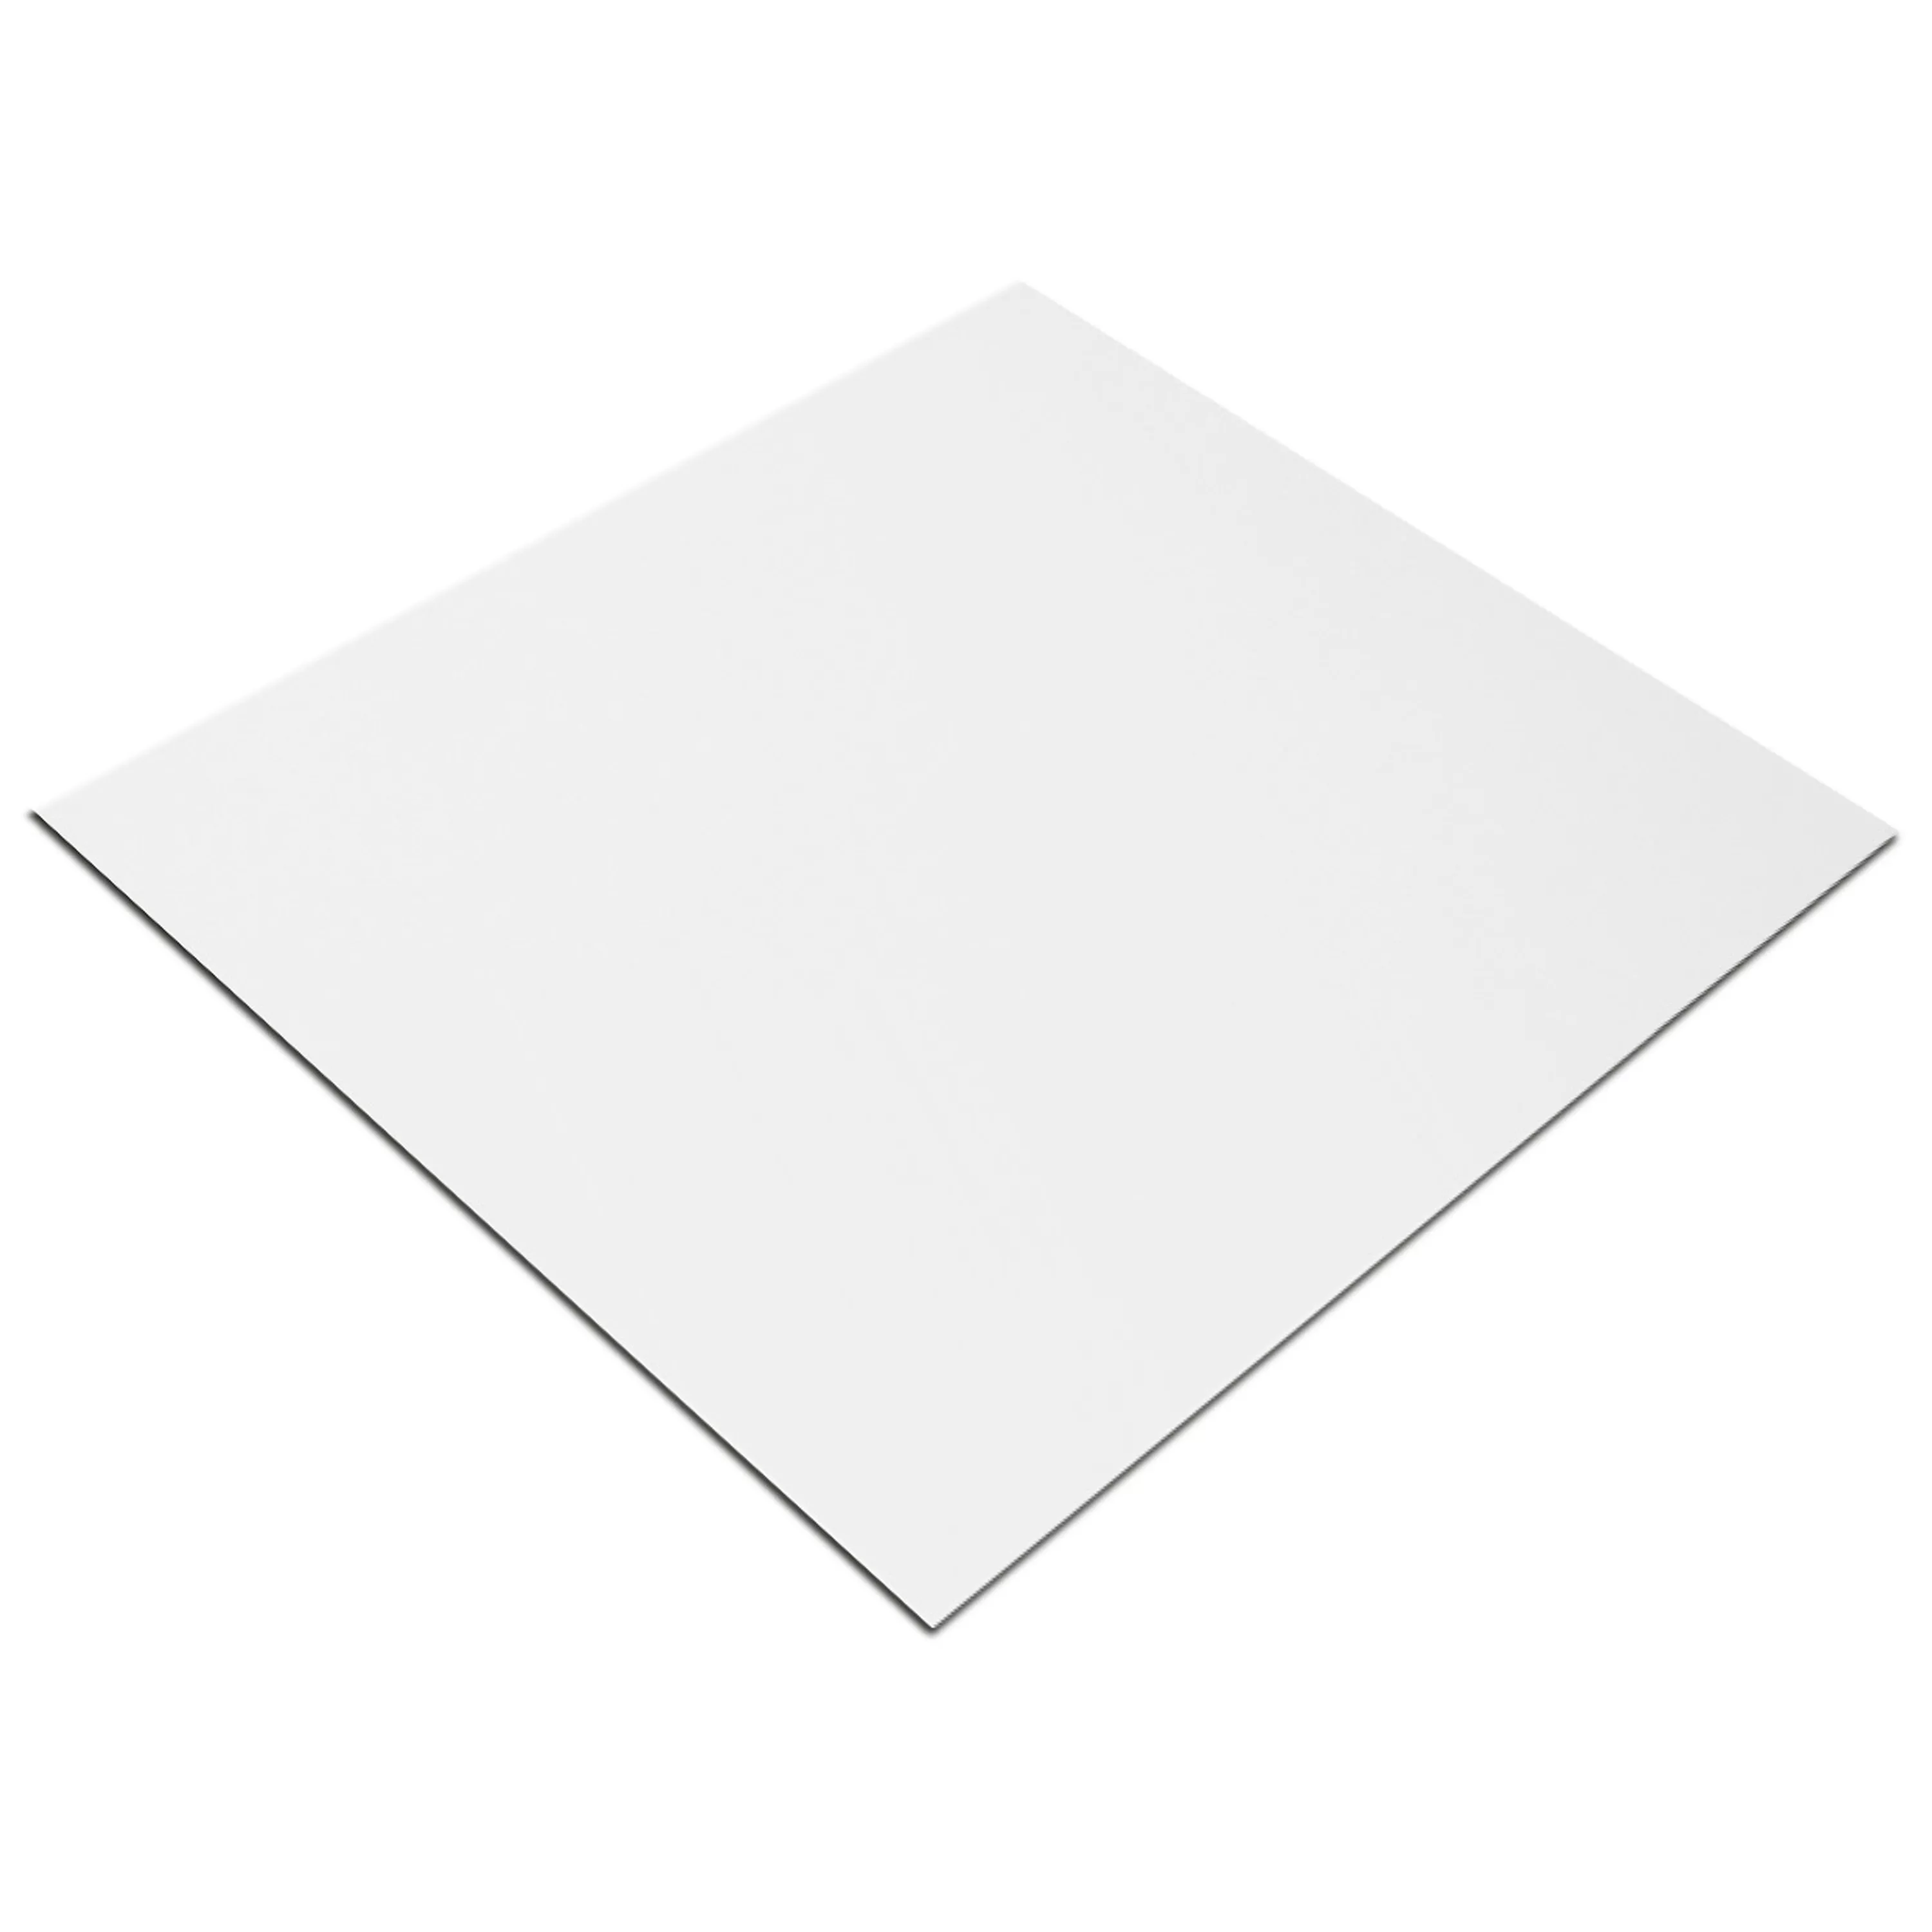 Sample Wall Tiles Fenway White Mat 25x33cm